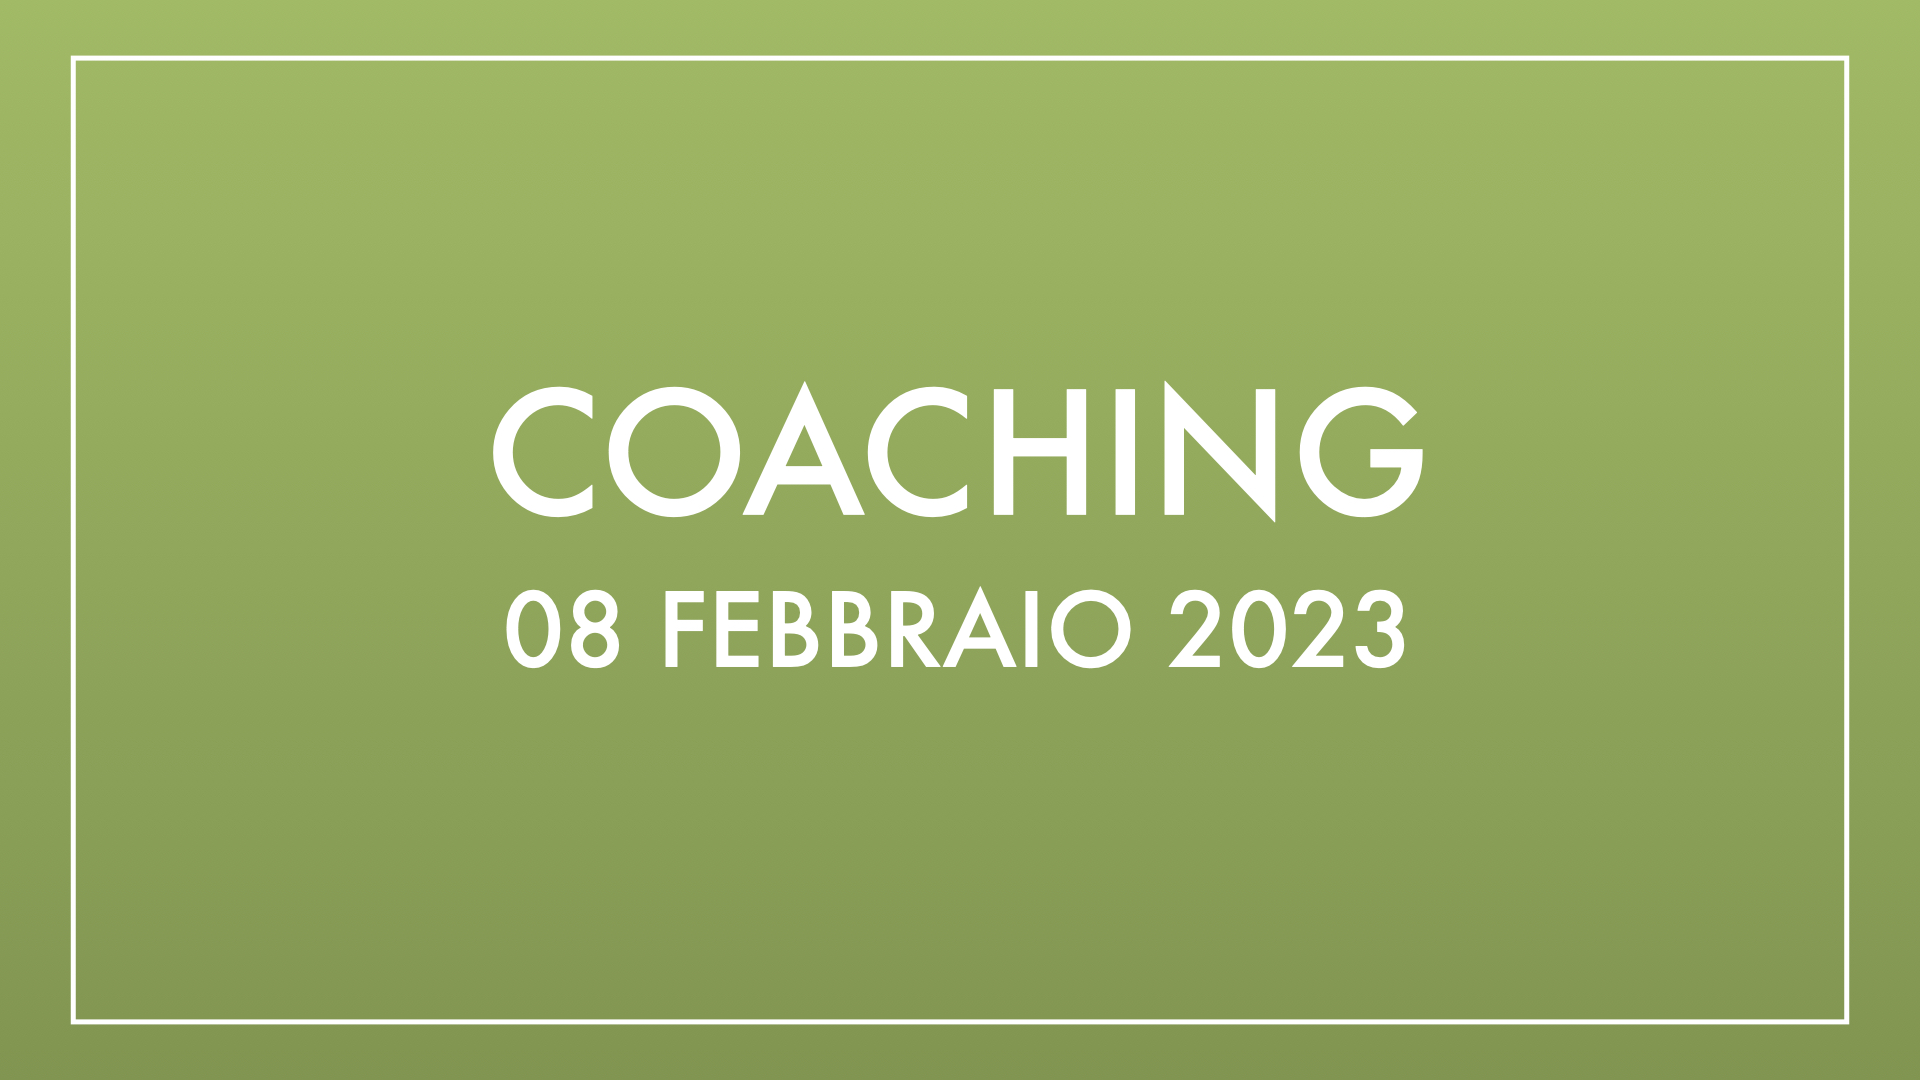 Coaching 08 febbraio 2023